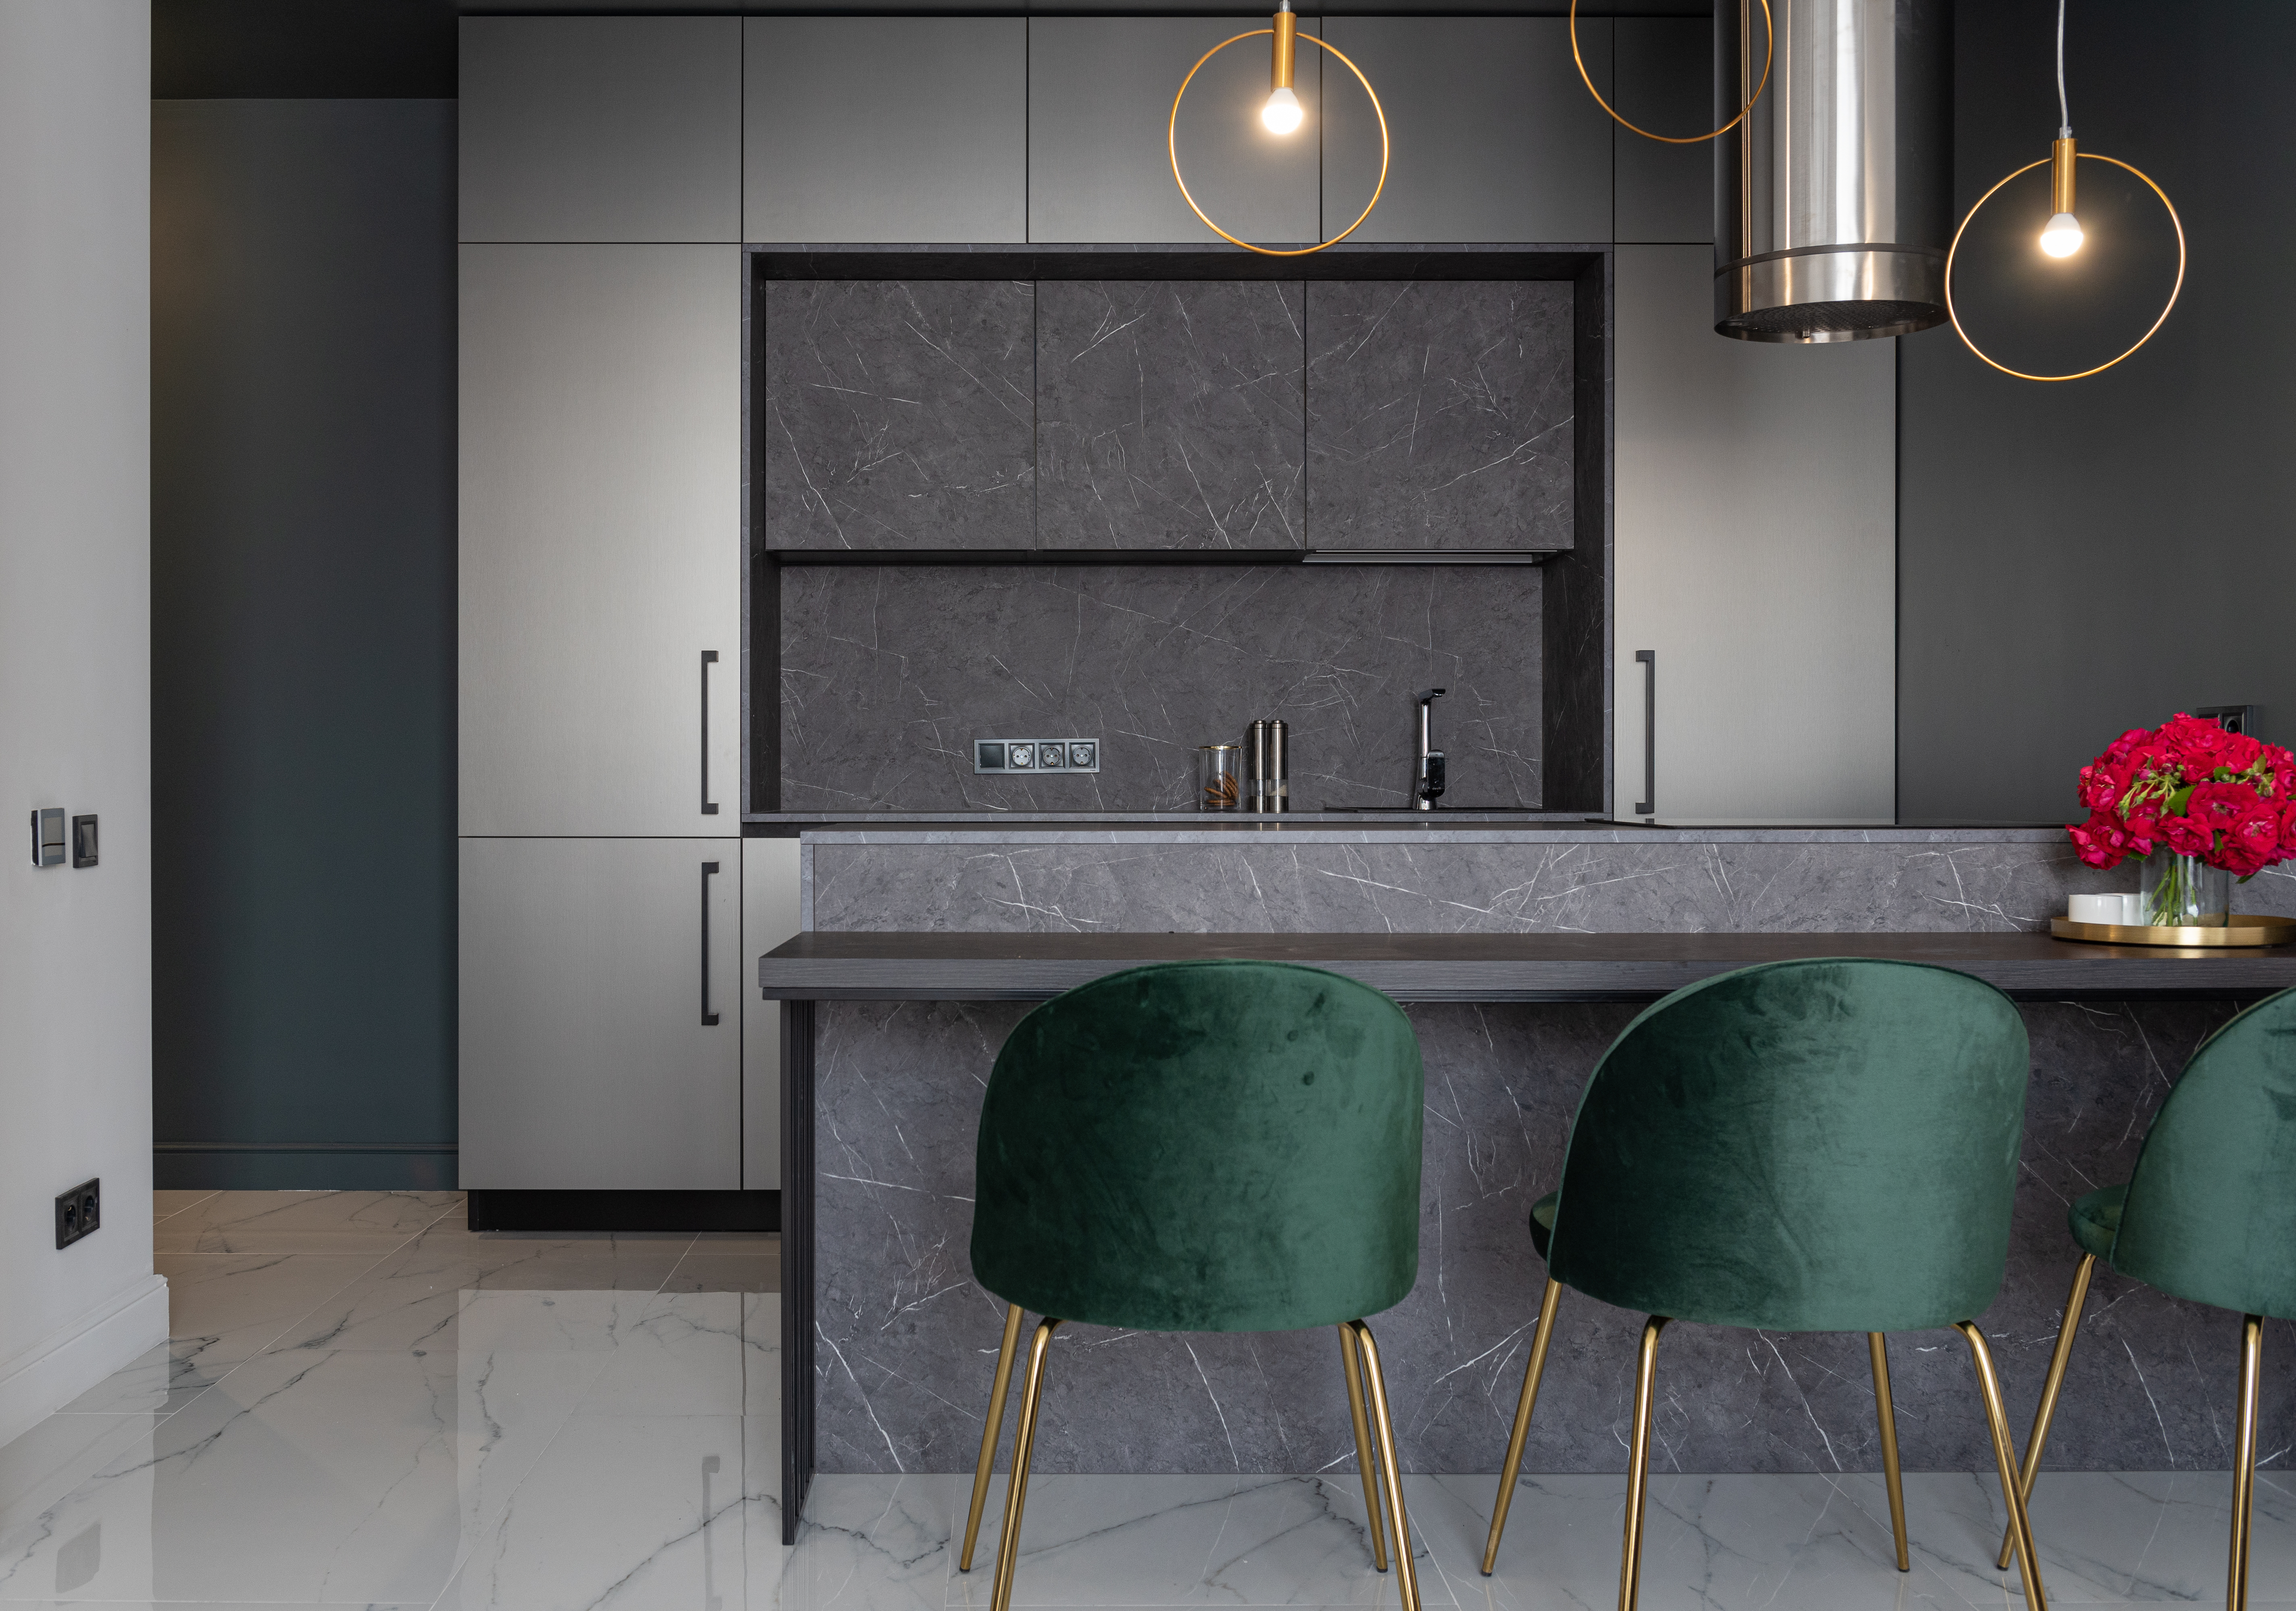 Stylish interior design of kitchen with furniture